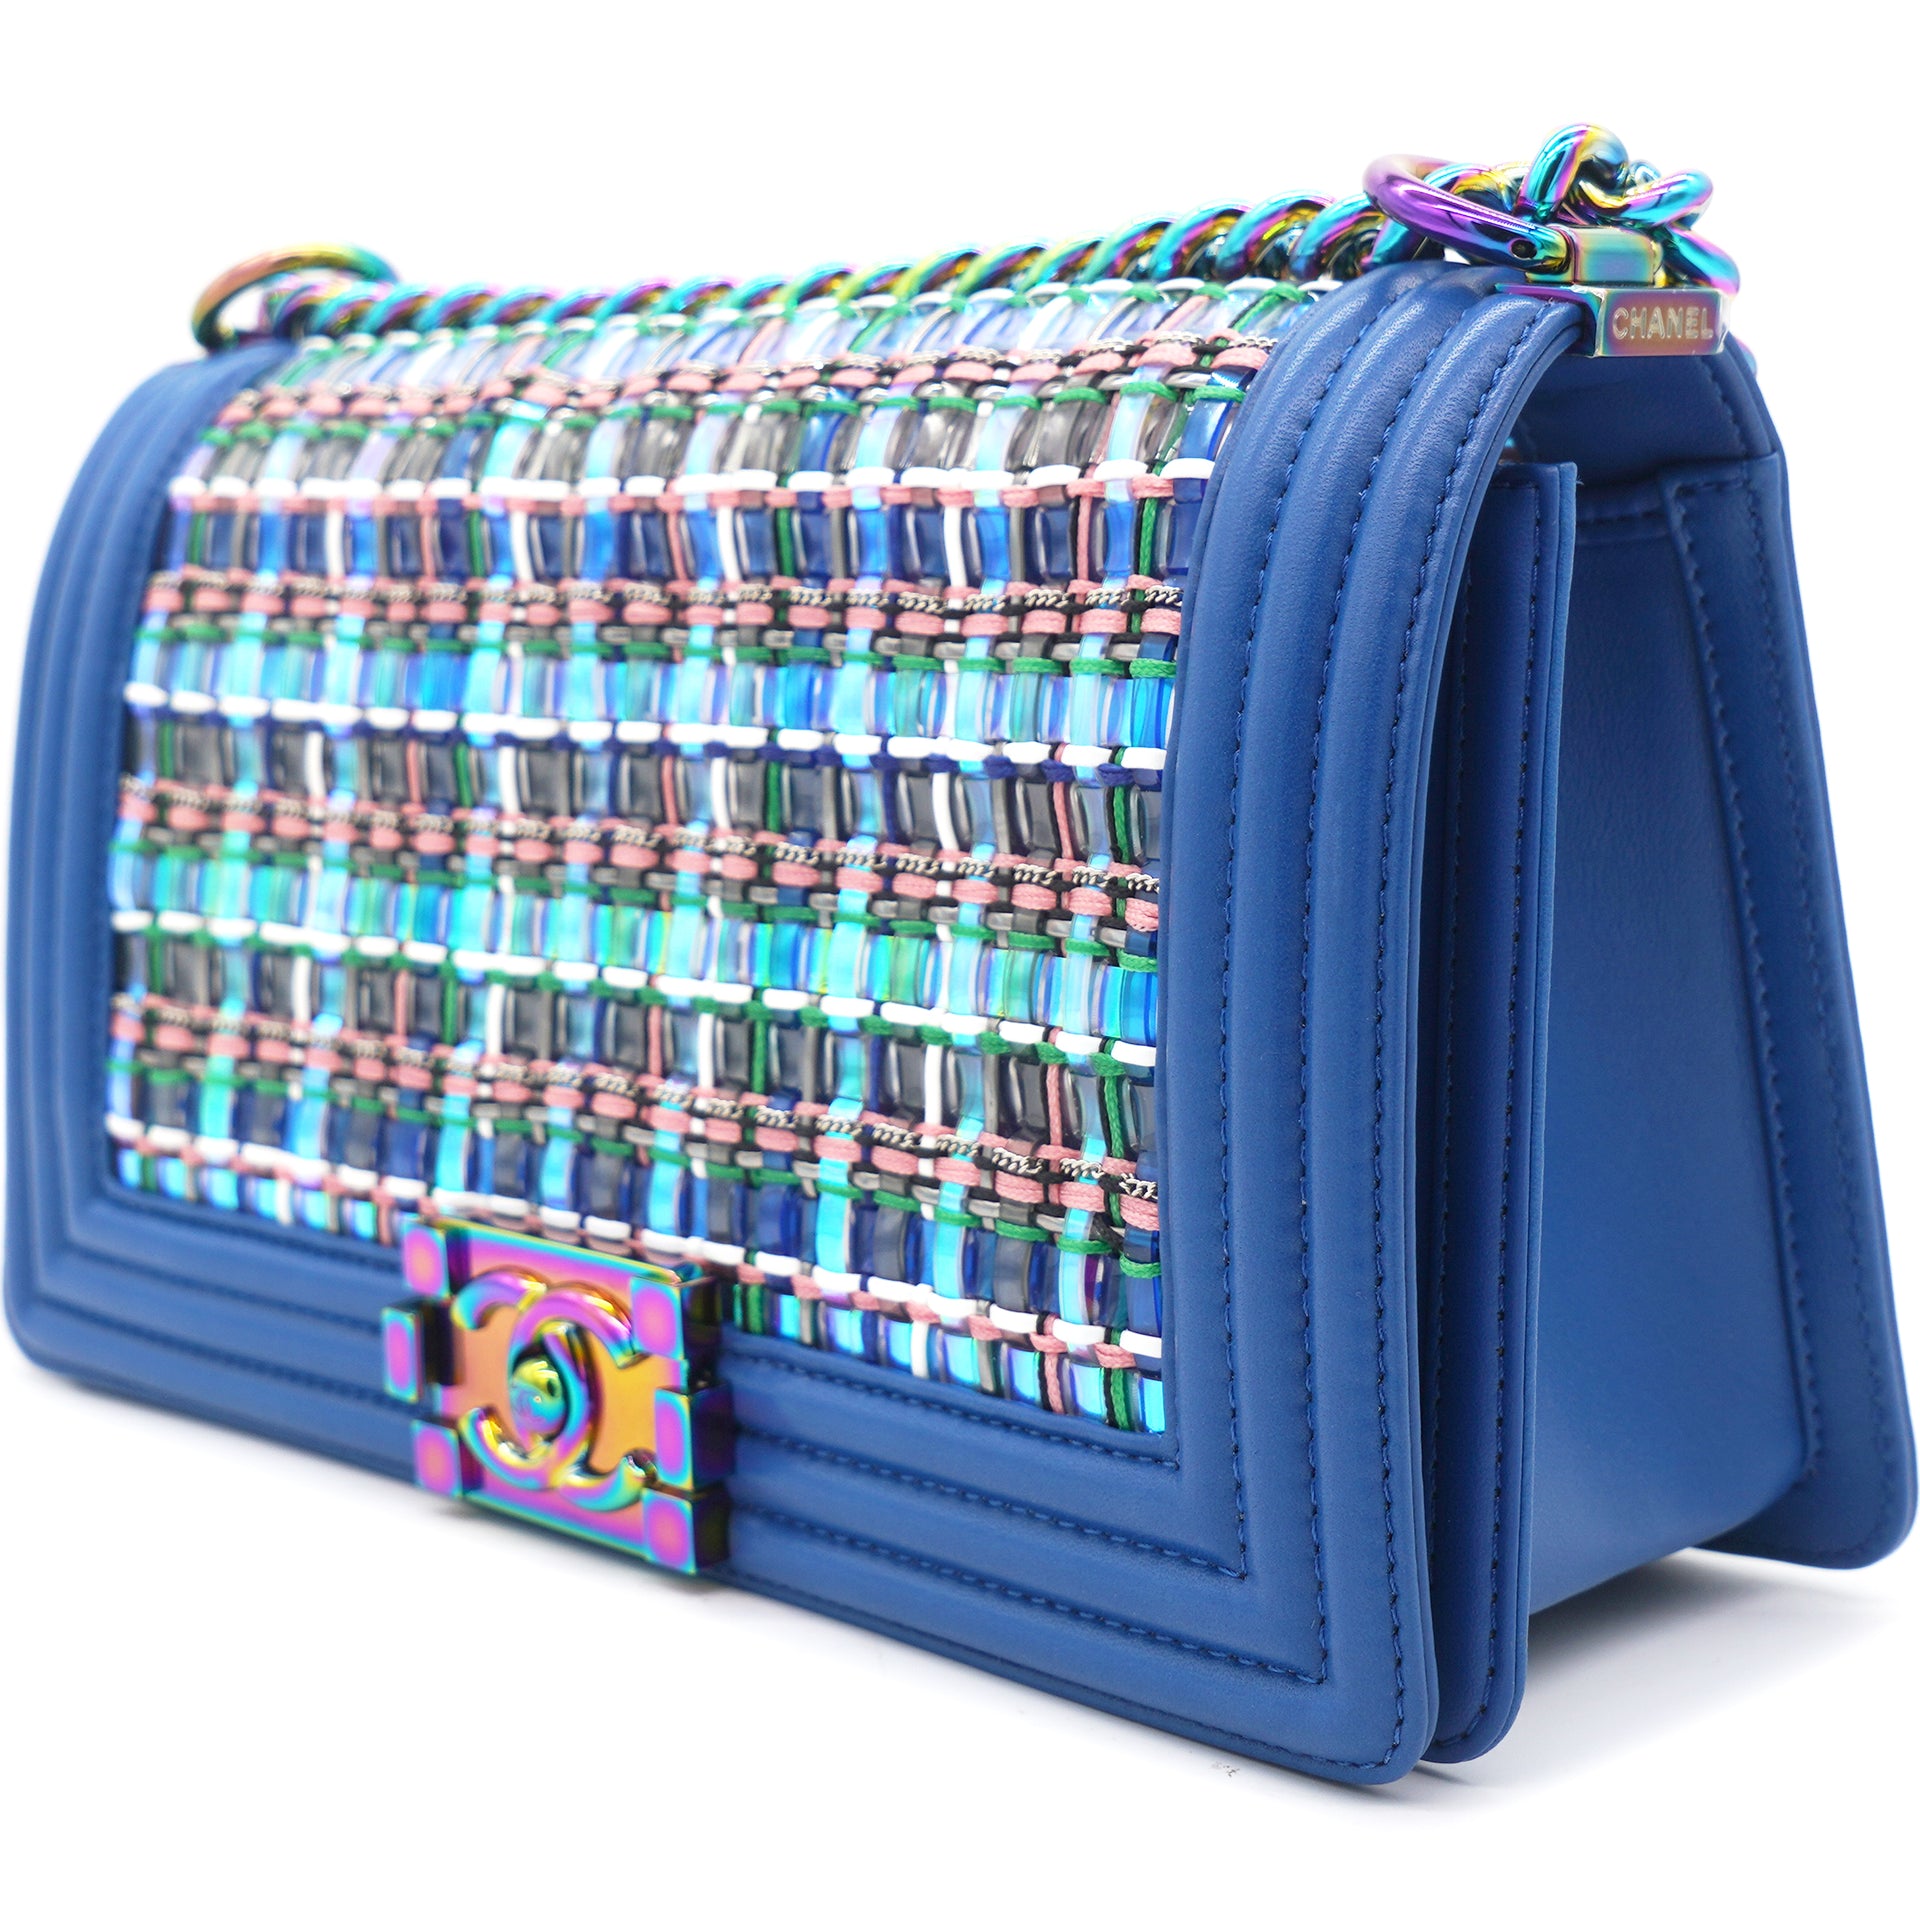 Chanel 2018 Small Rainbow Boy Bag - Blue Shoulder Bags, Handbags